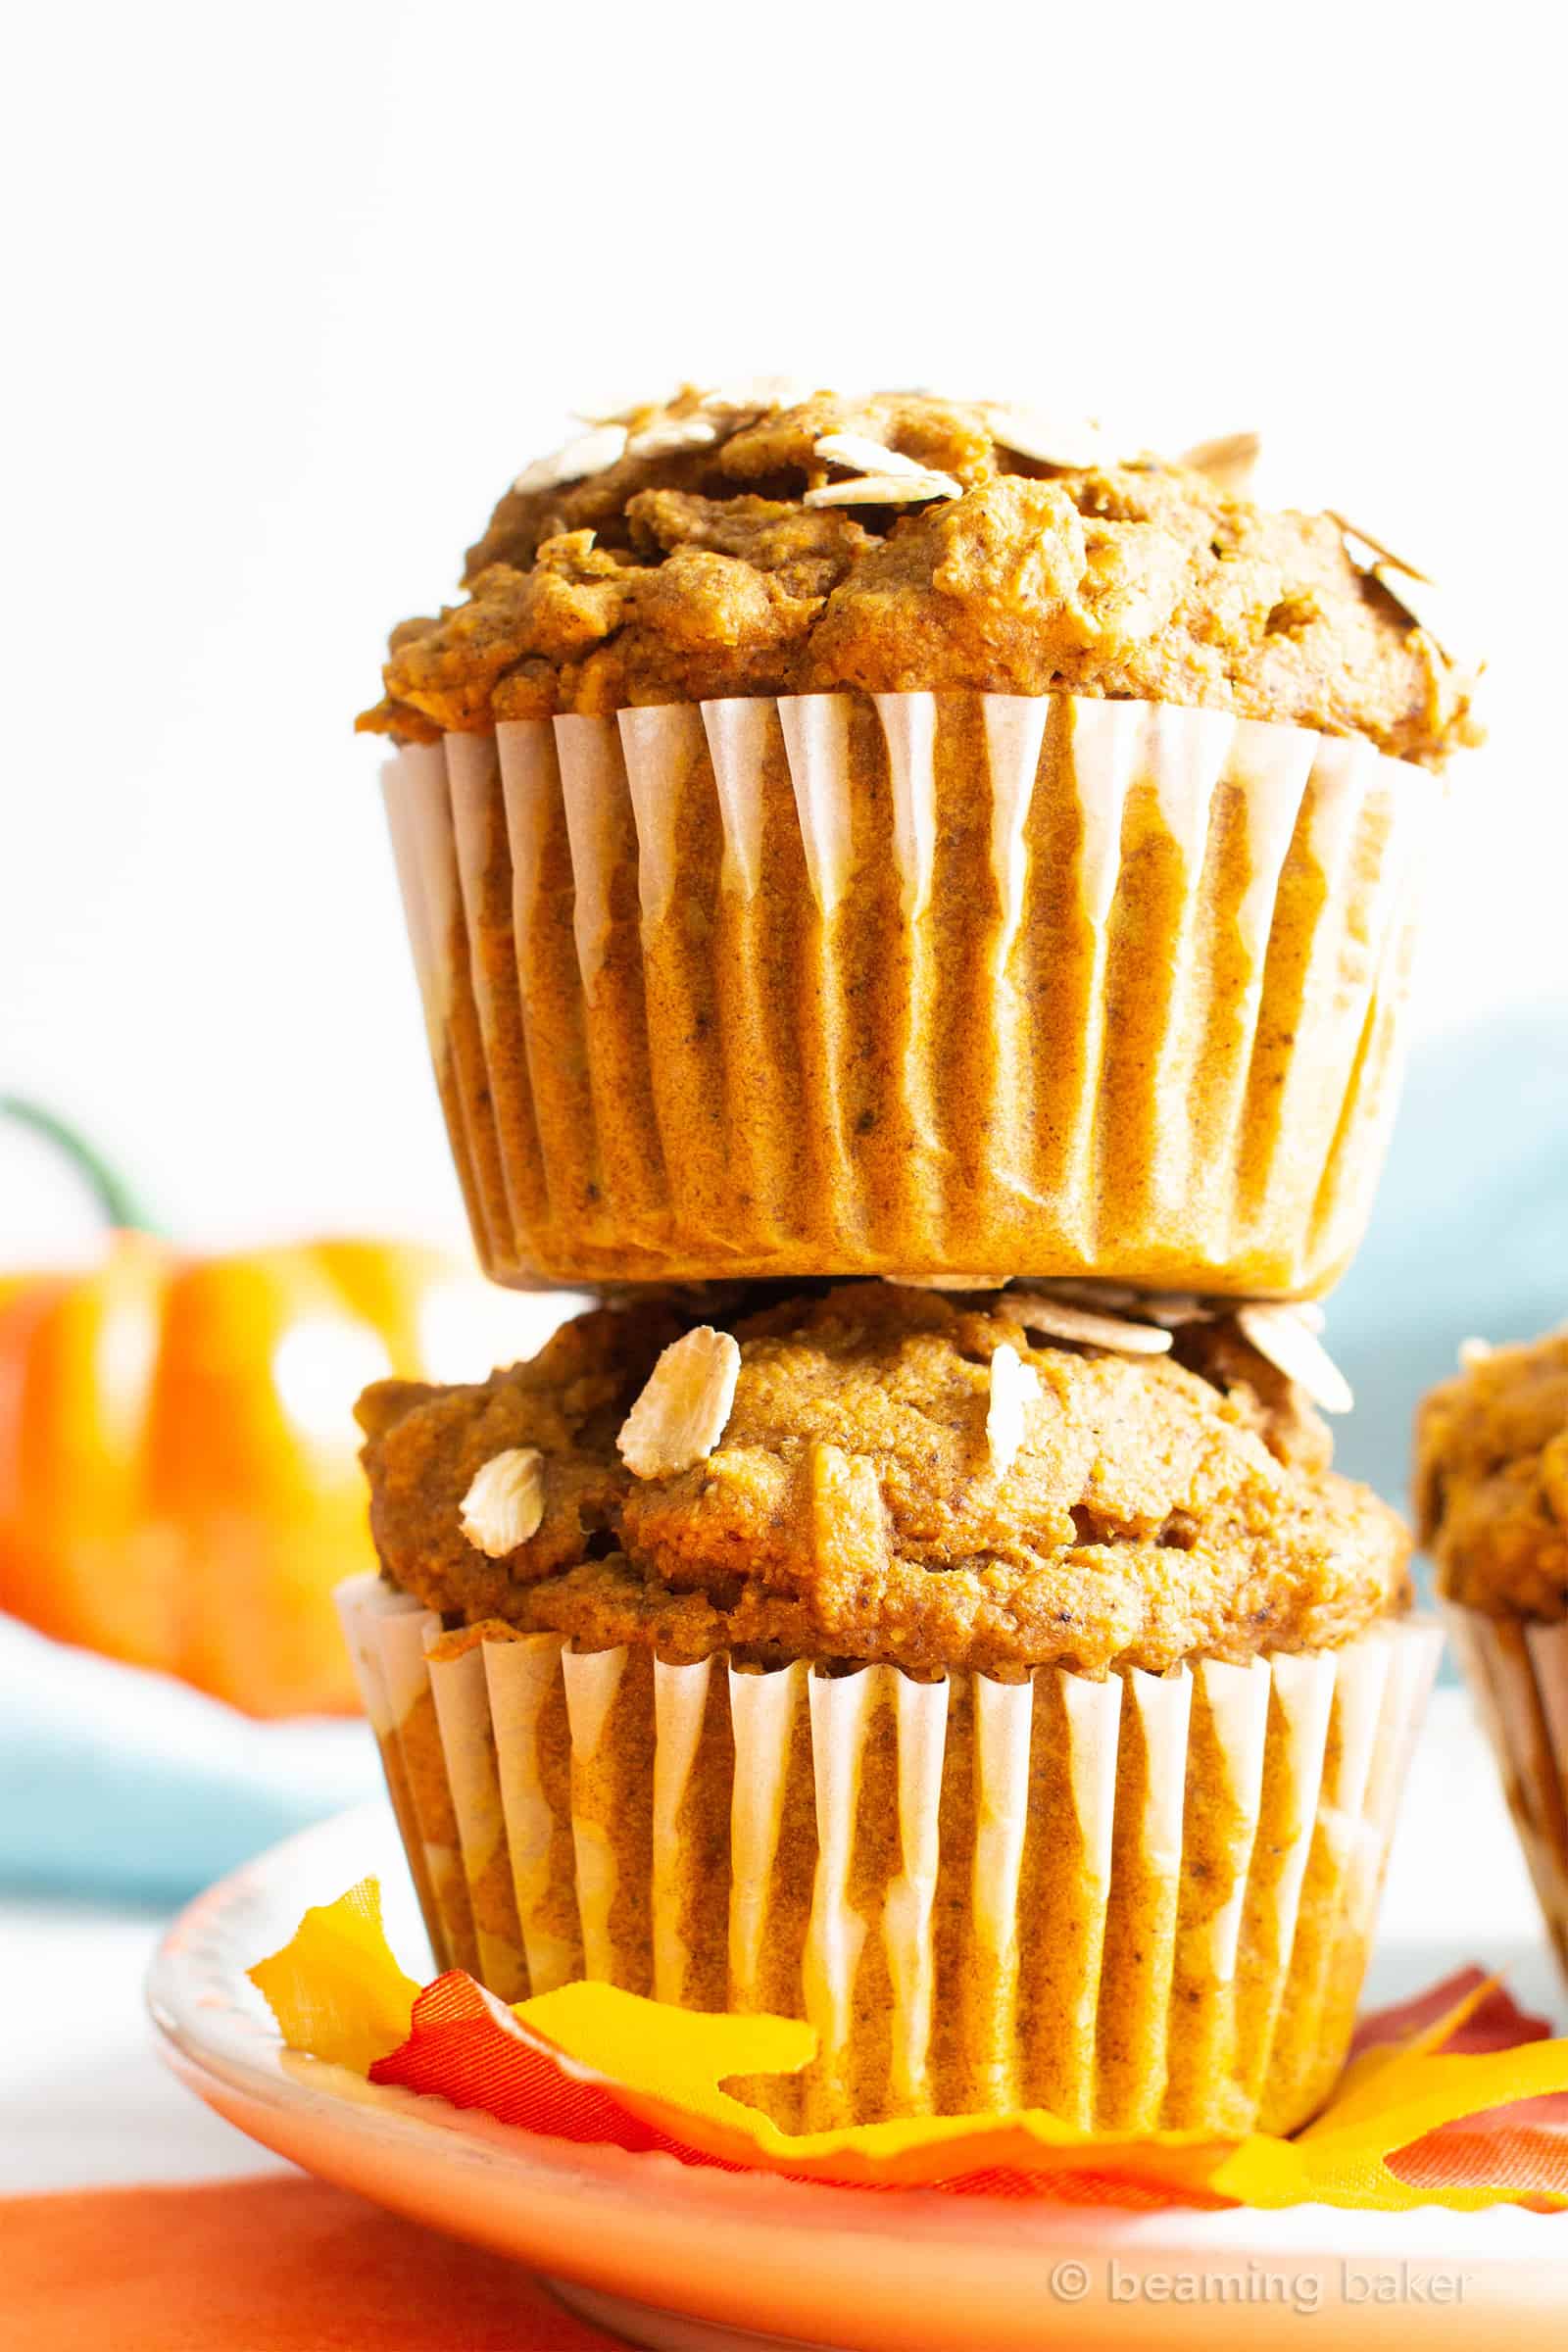 This Healthy Pumpkin Oatmeal Muffins recipe yields lightly sweet, moist pumpkin oatmeal muffins made with vegan + gluten free ingredients. #Pumpkin #Oatmeal #Muffins | Recipe at BeamingBaker.com